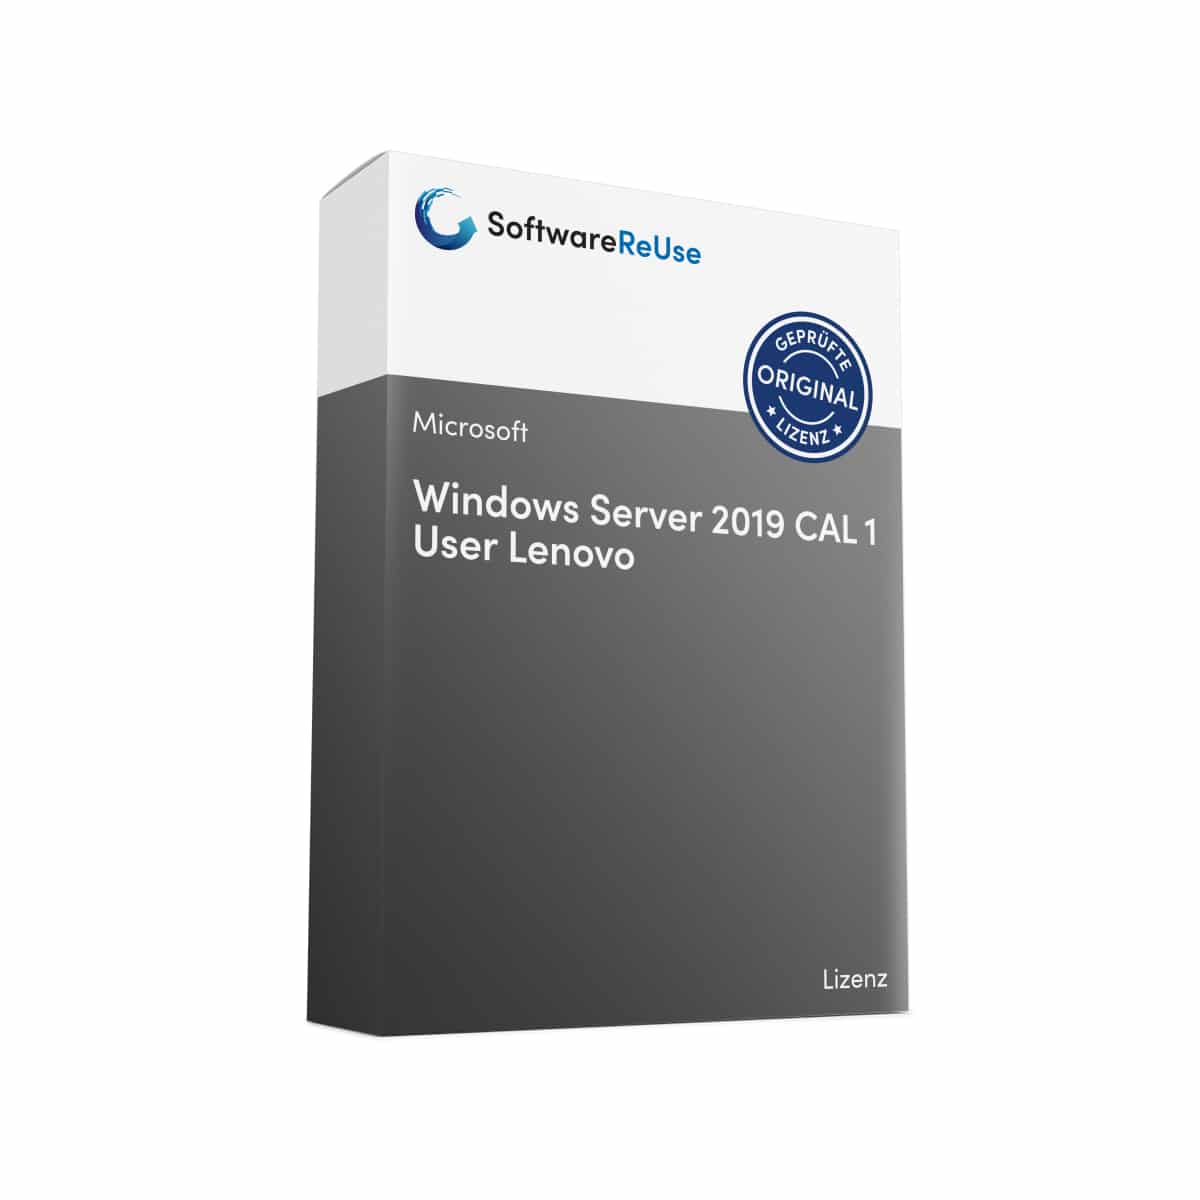 Windows Server 2019 CAL 1 User Lenovo – DE. jpg